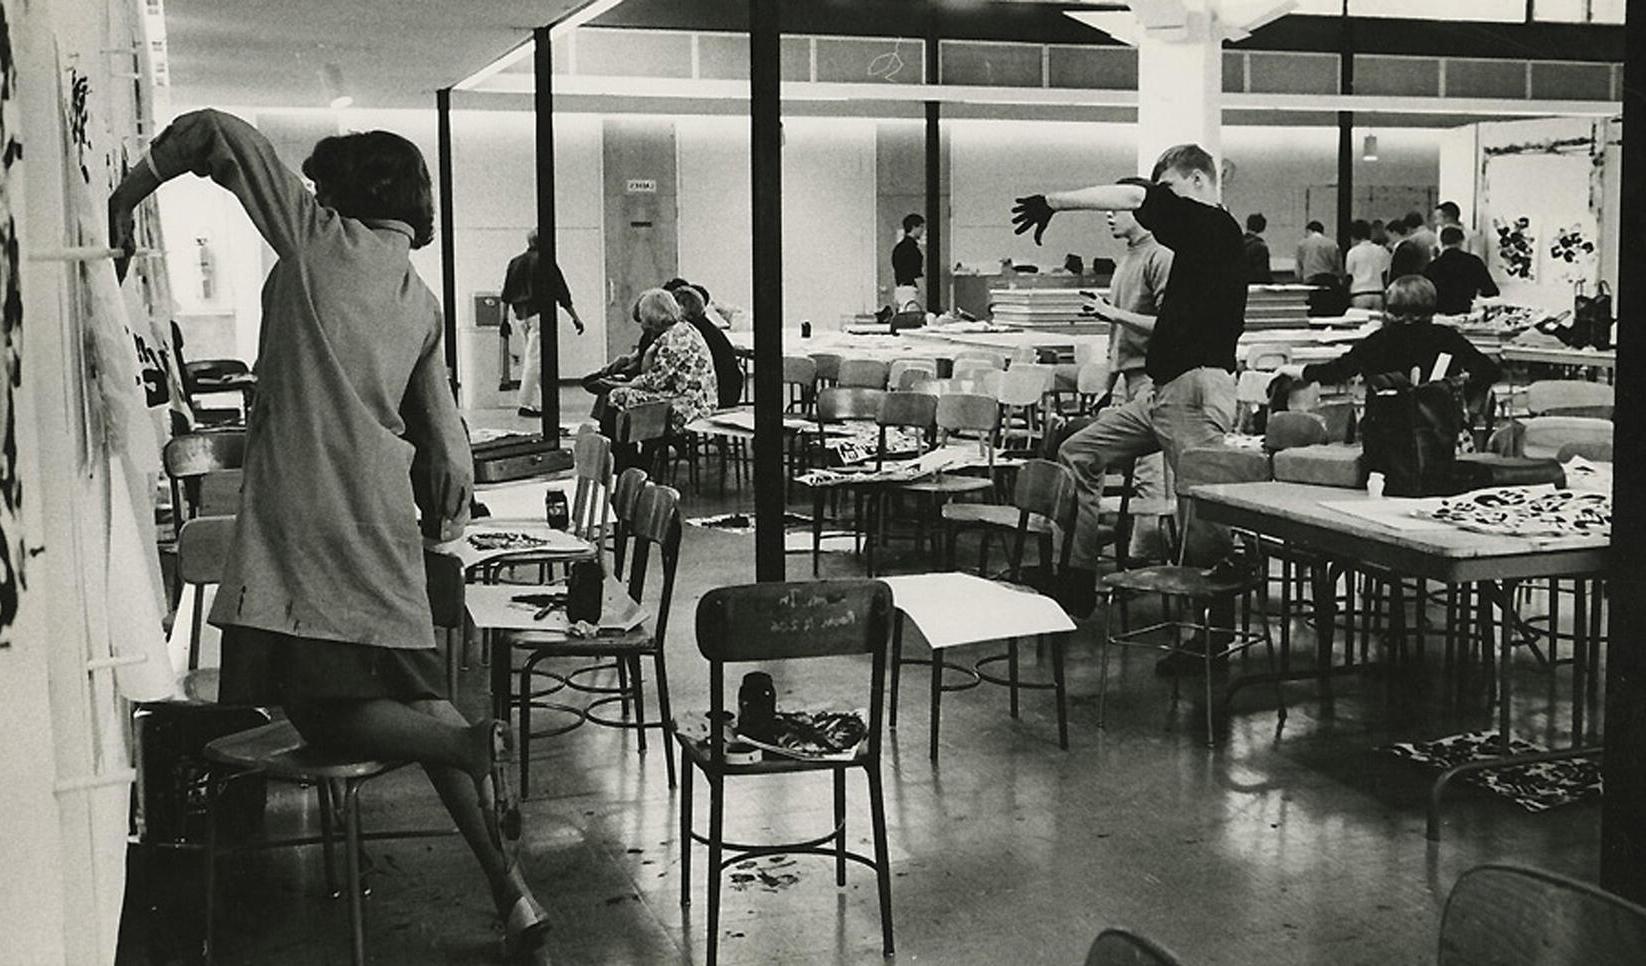 60-70s classroom at MCAD